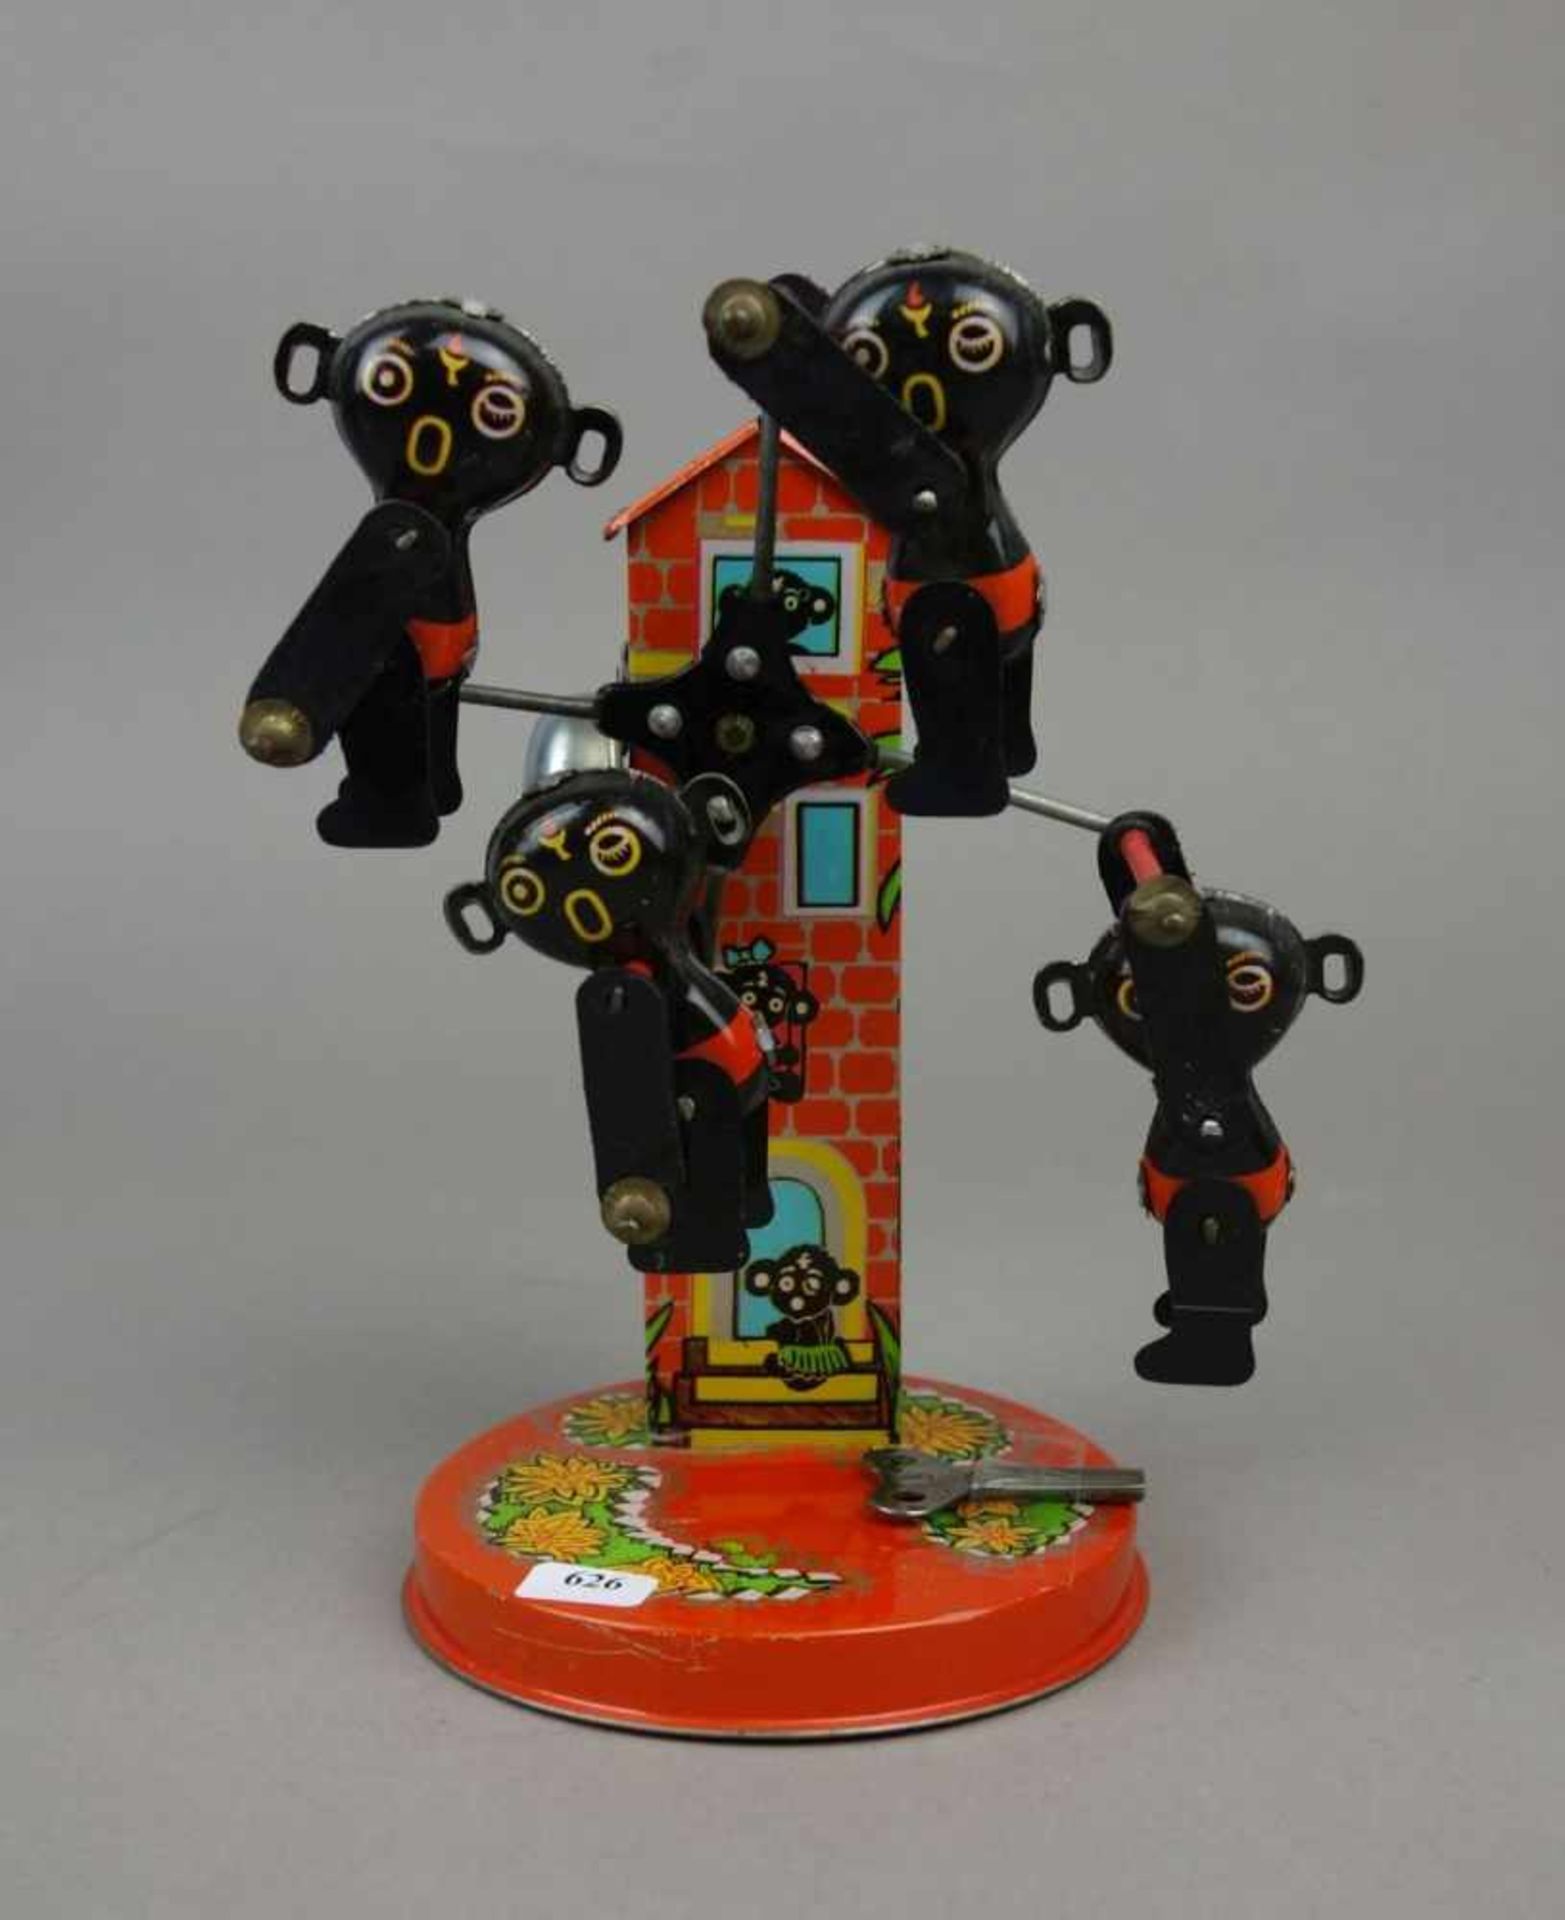 BLECHSPIELZEUG: Karussell / "Affenschaukel" / tin toy carousel with apes, Blech, polychrom